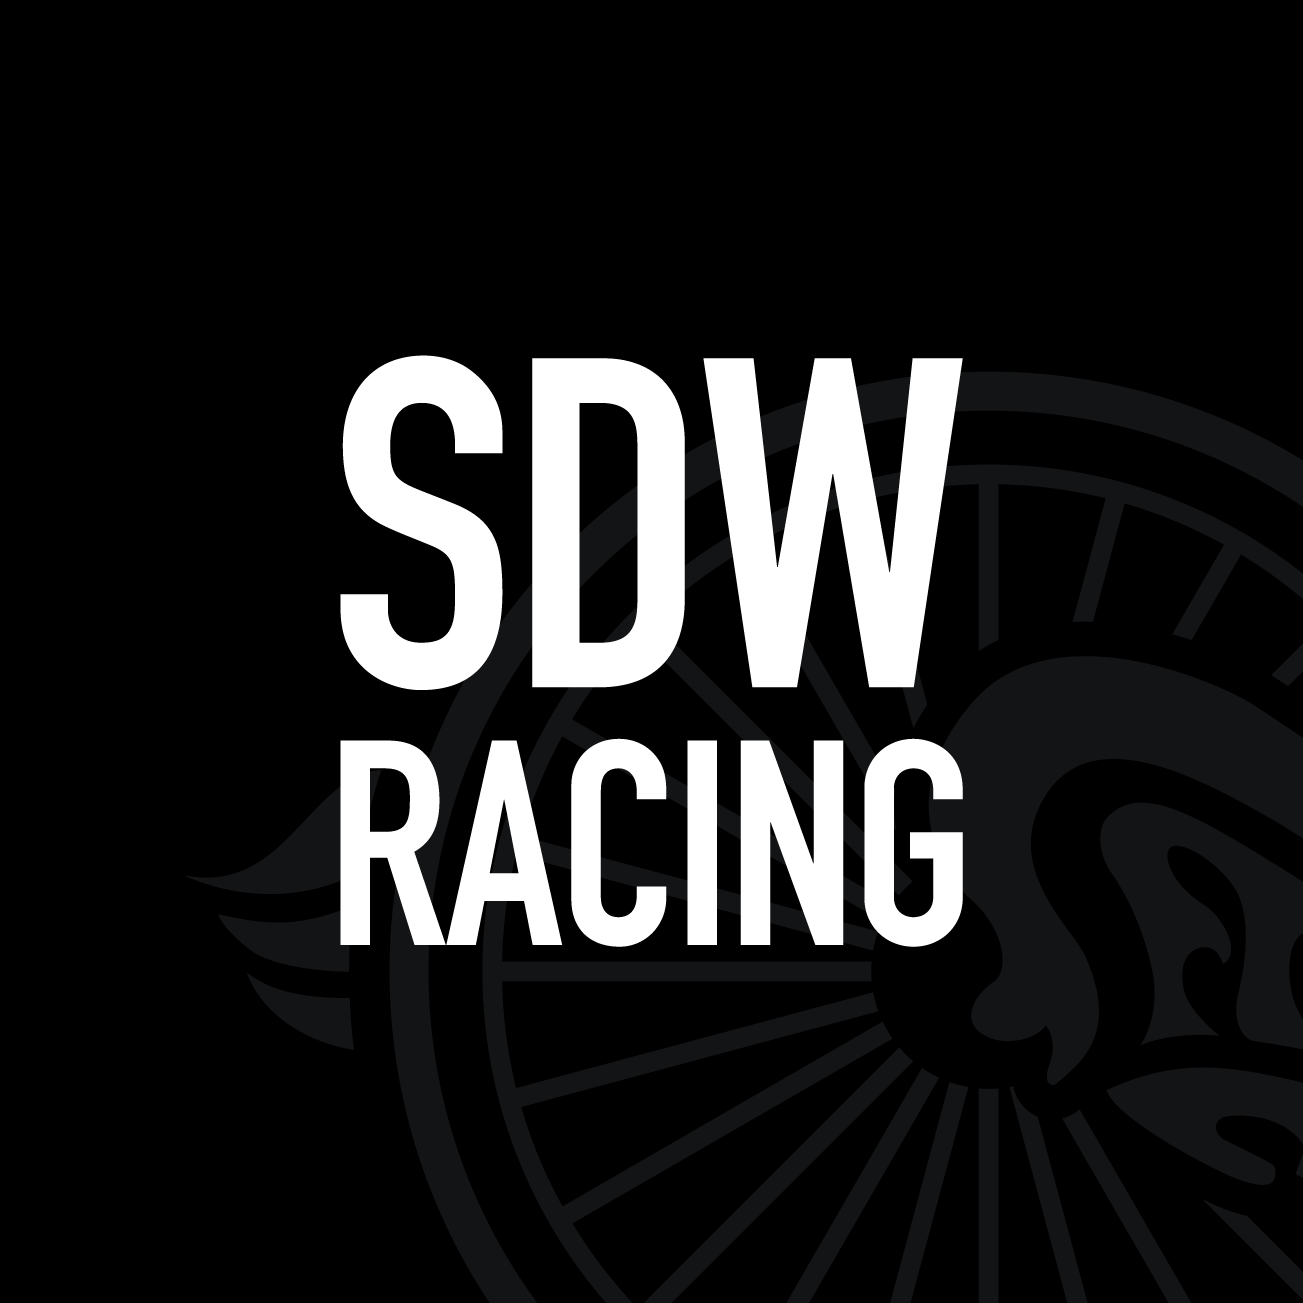 Club Image for SDW RACING